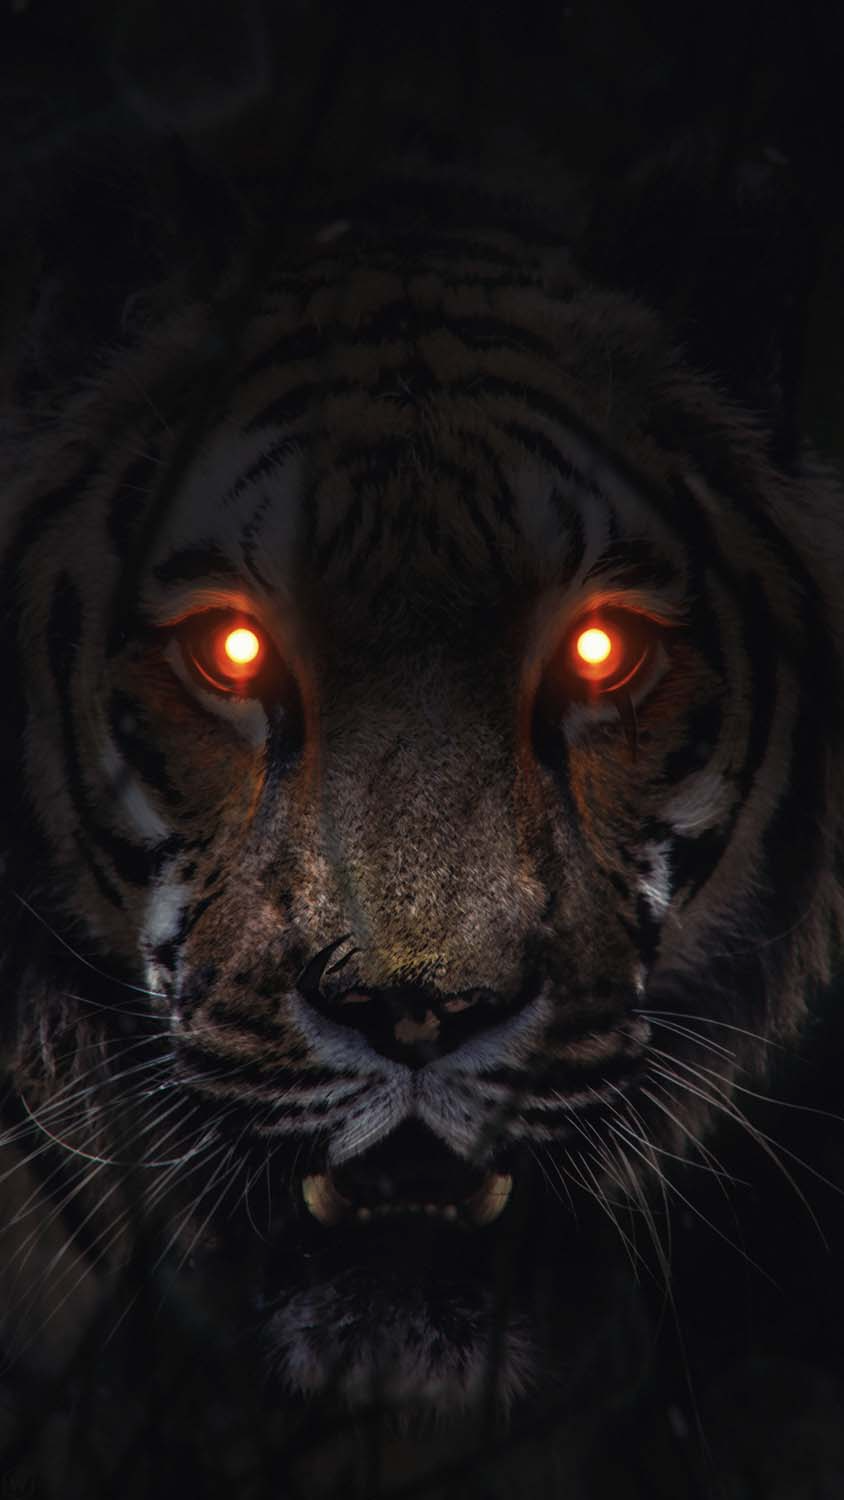  Tiger Black Amoled Wallpaper 4k Ultra HD Free Download